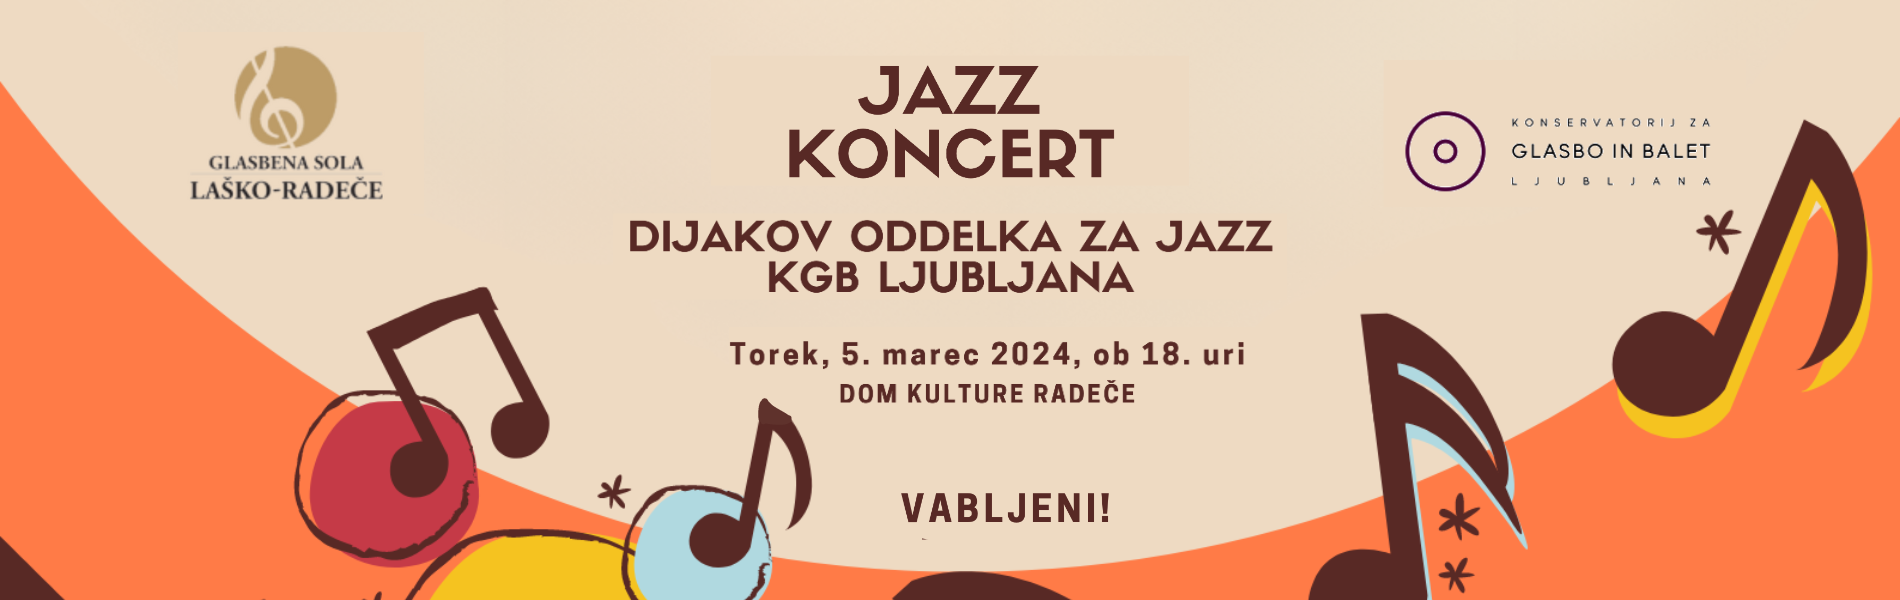 jazz koncert